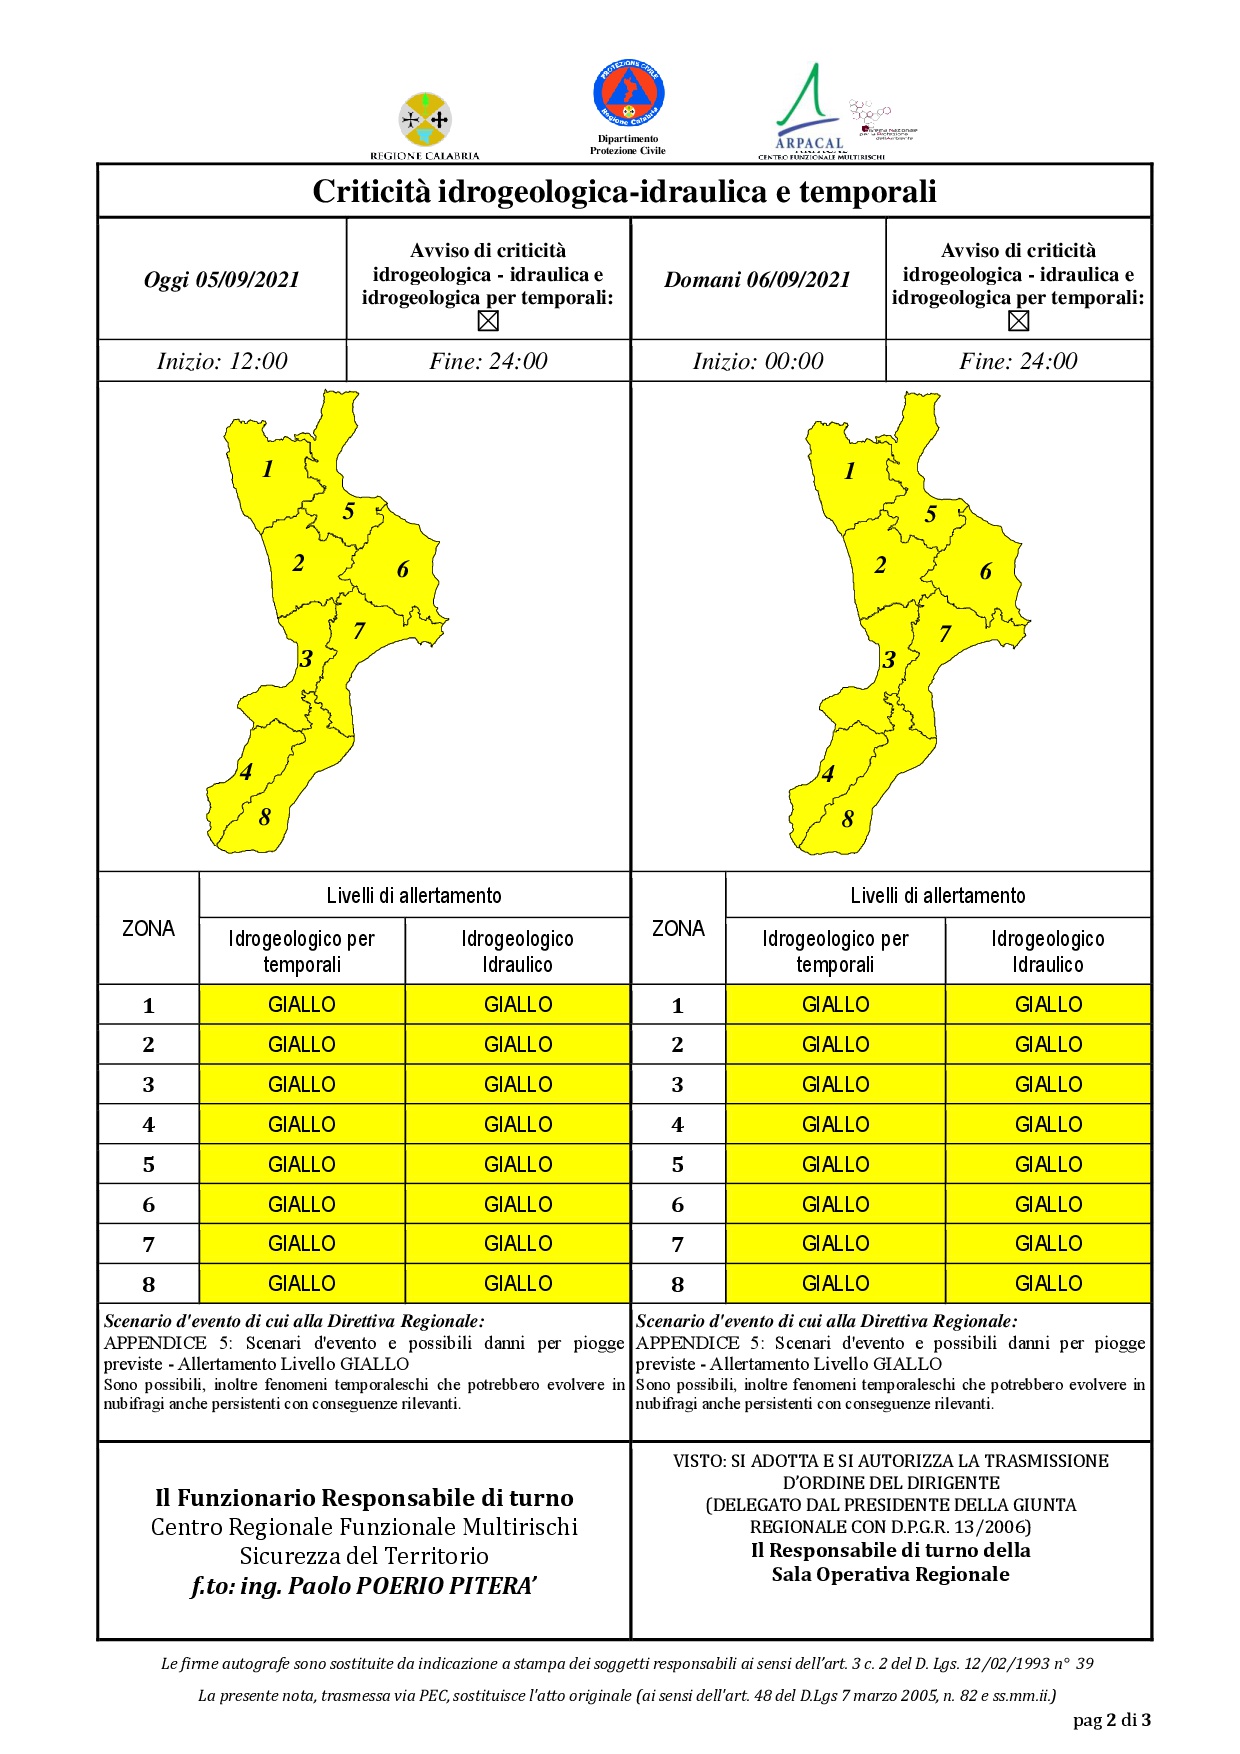 Criticità idrogeologica-idraulica e temporali in Calabria 05-09-2021